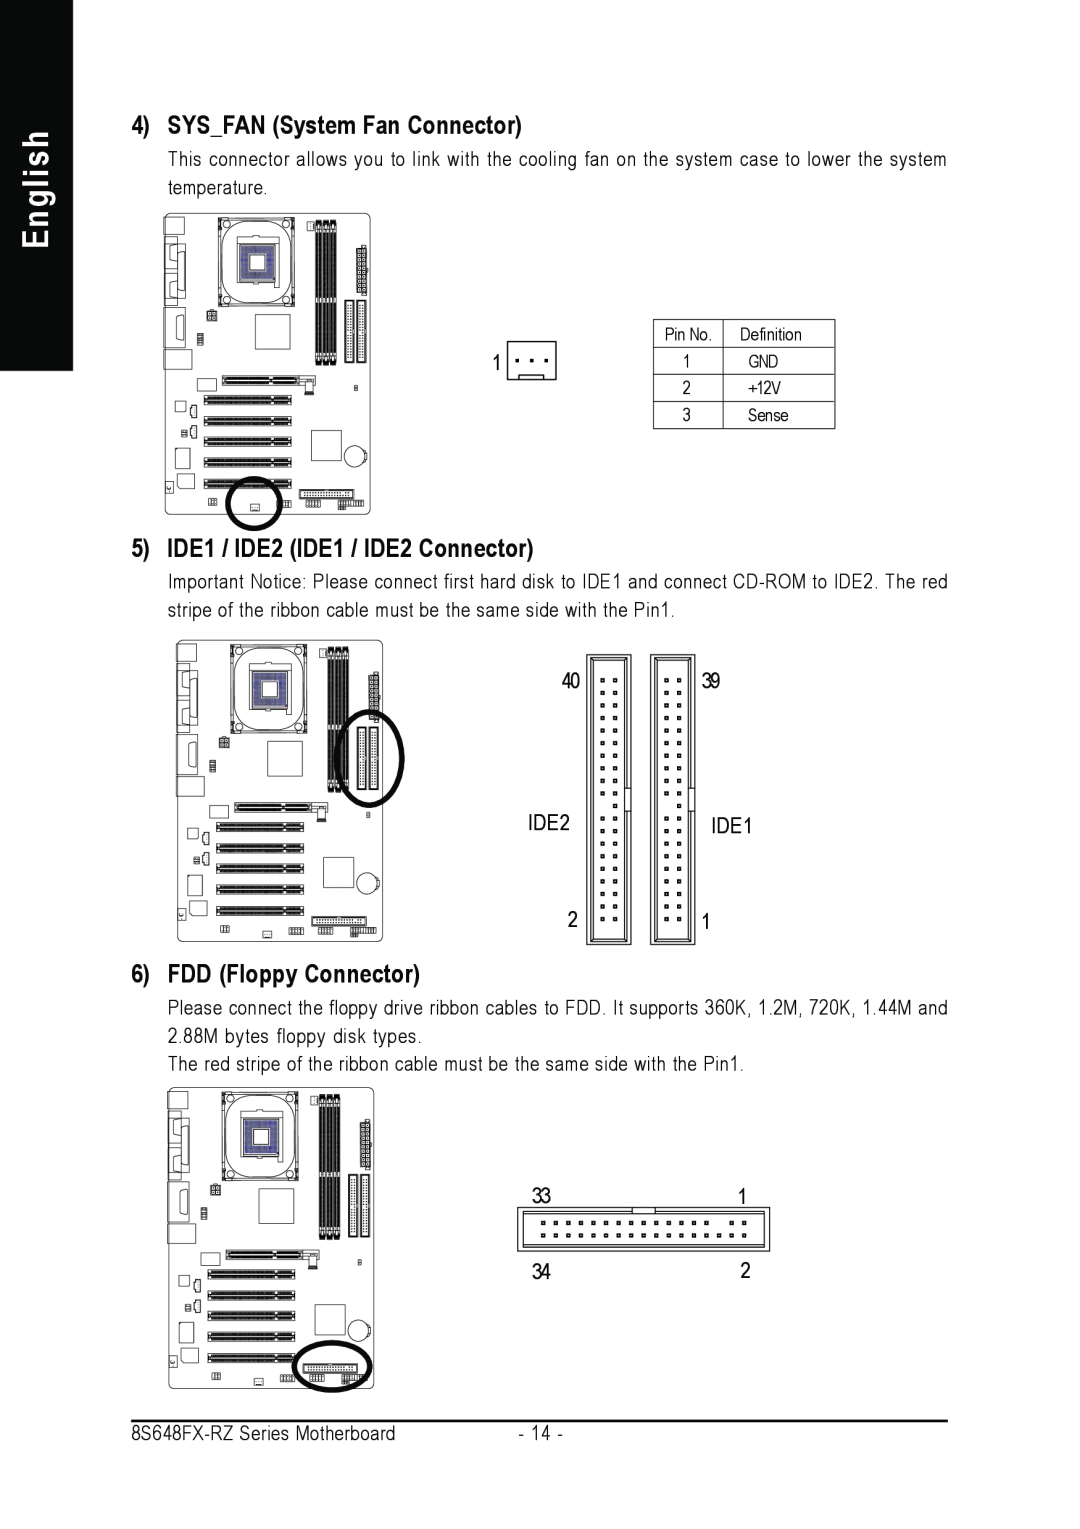 Gigabyte 8S648FX-RZ-C English, SYSFAN System Fan Connector, 5 IDE1 / IDE2 IDE1 / IDE2 Connector, FDD Floppy Connector 